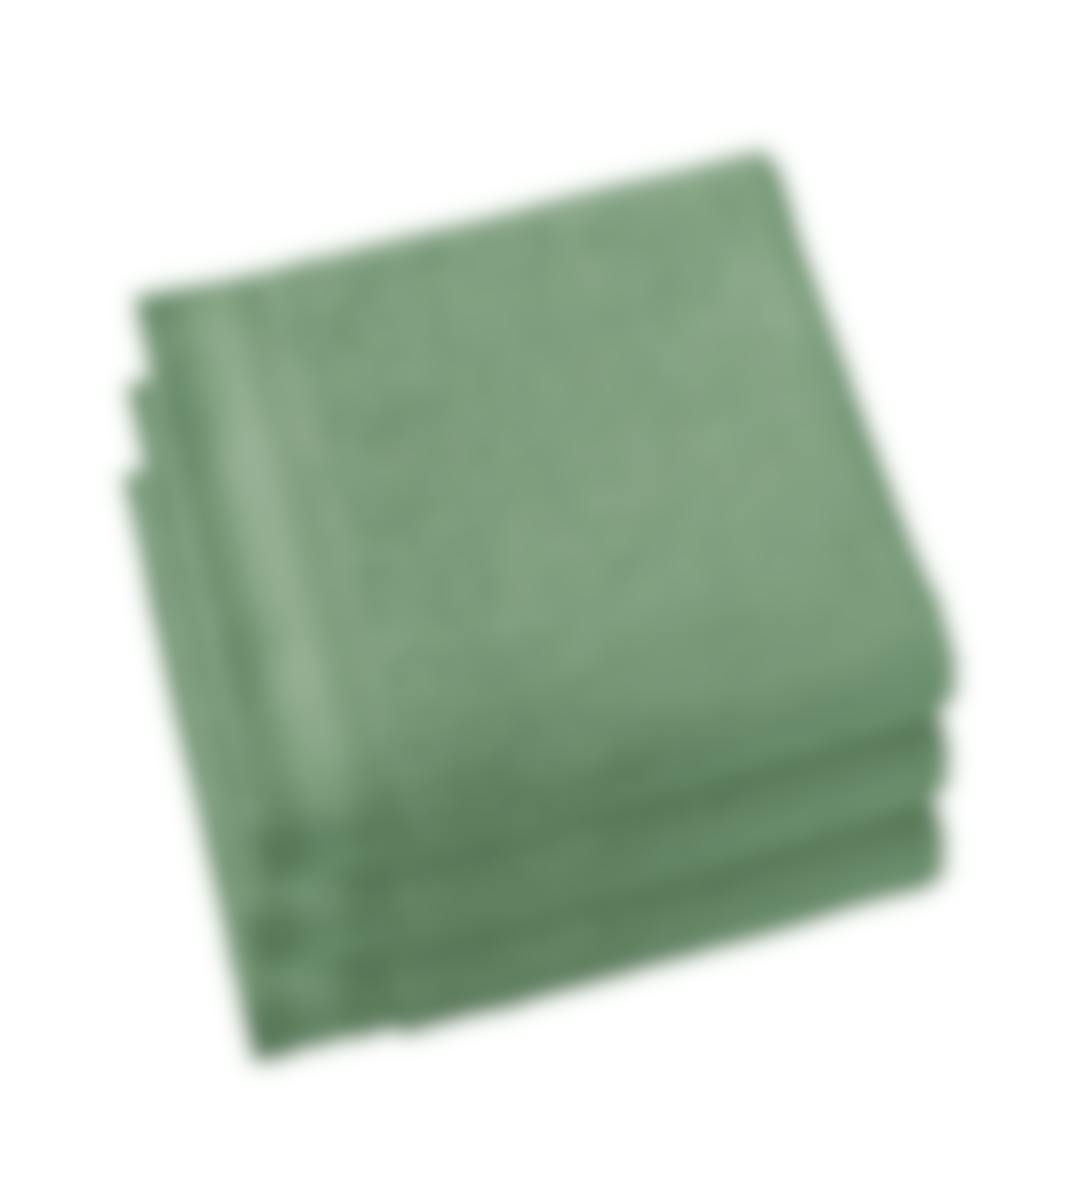 De Witte Lietaer serviette de bain Contessa Sea Green 50 x 100 cm set van 3